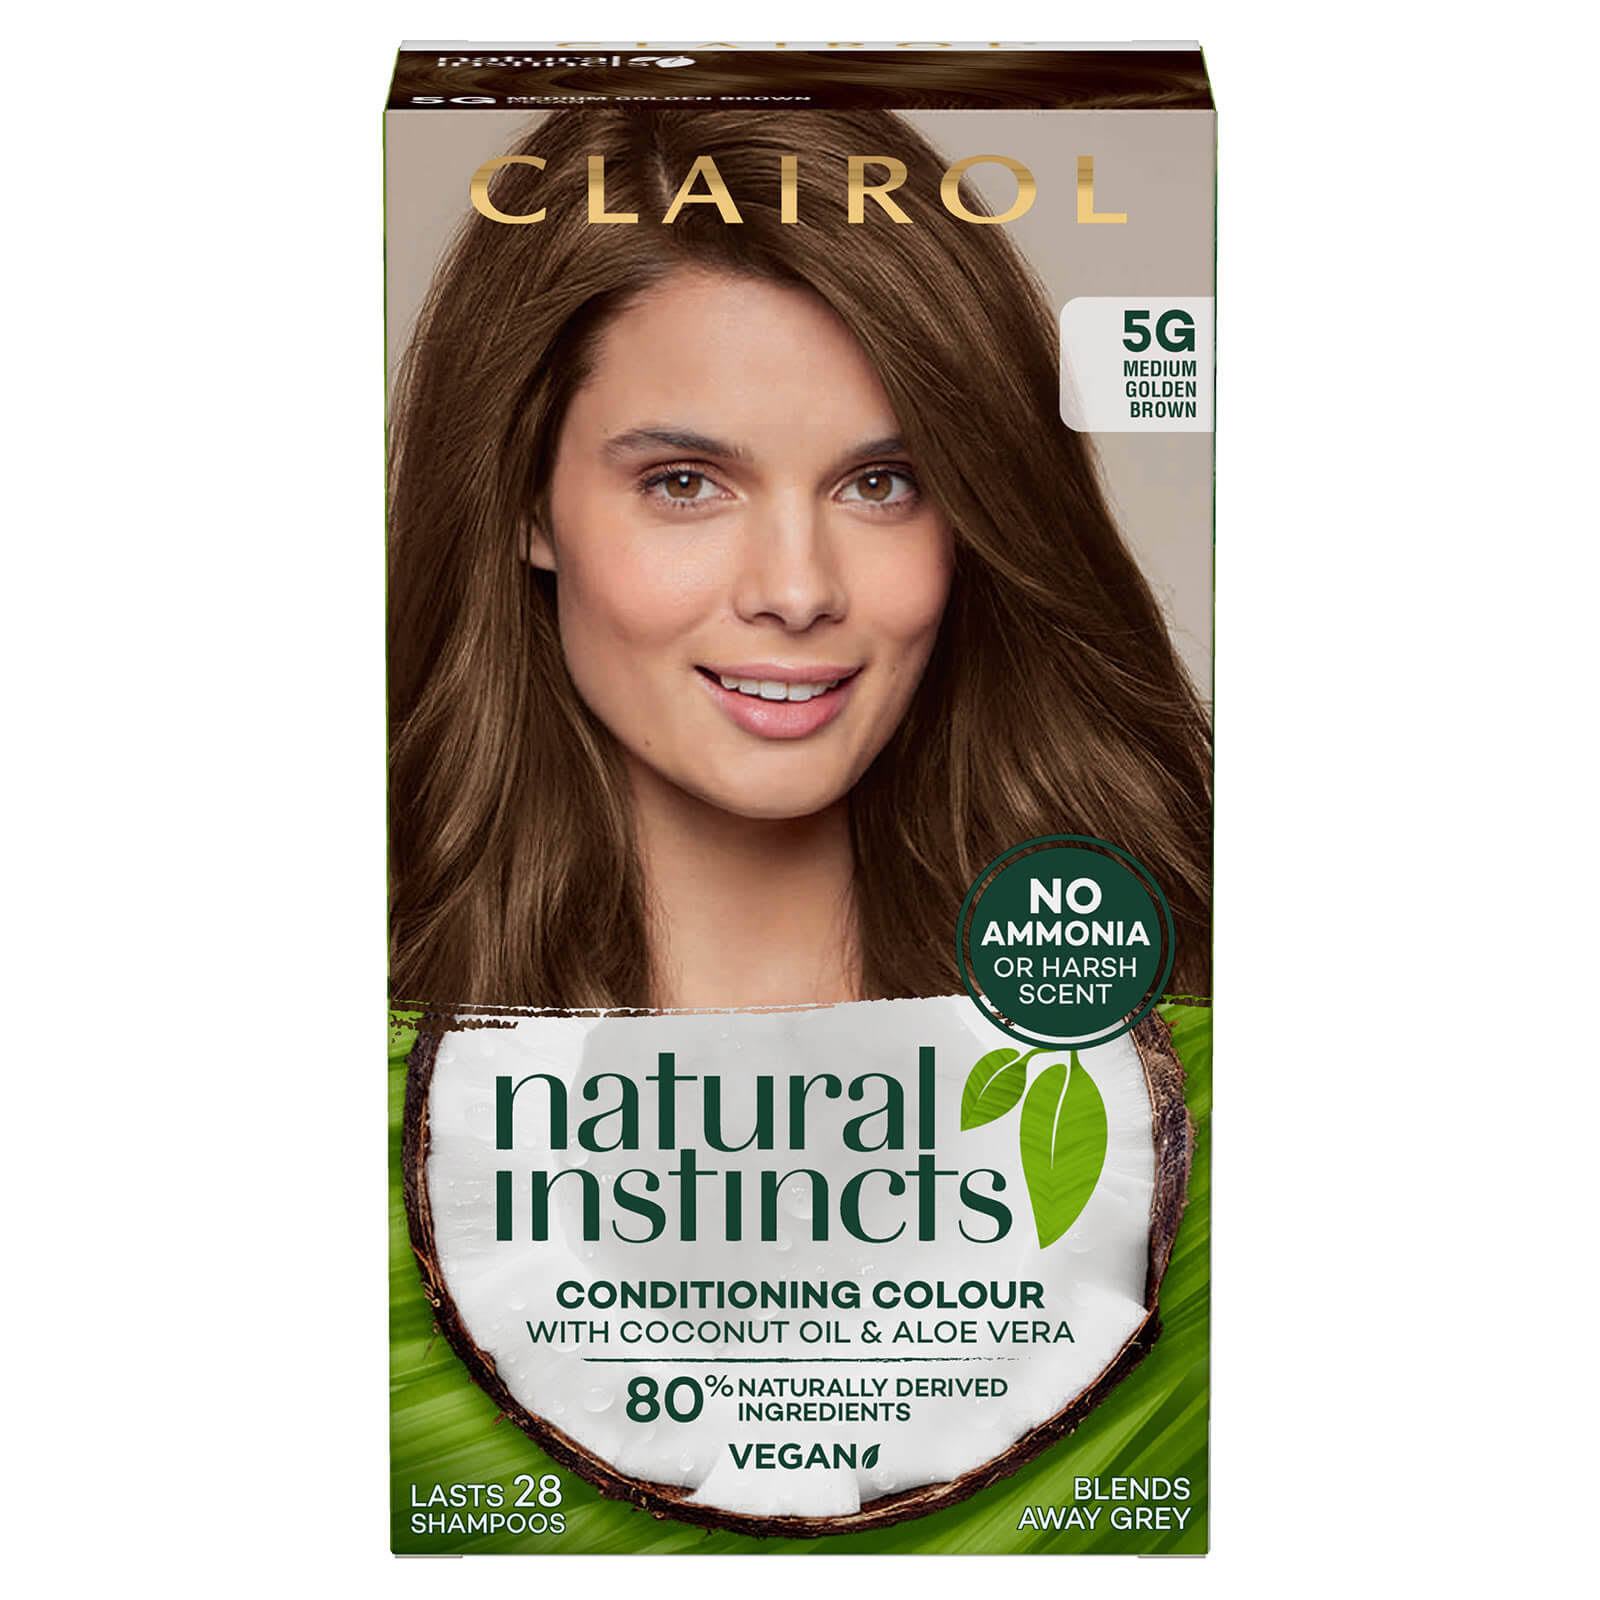 Clairol Natural Instincts Semi-Permanent No Ammonia Vegan Hair Dye 177ml (Various Shades) - 5 Medium Golden Brown